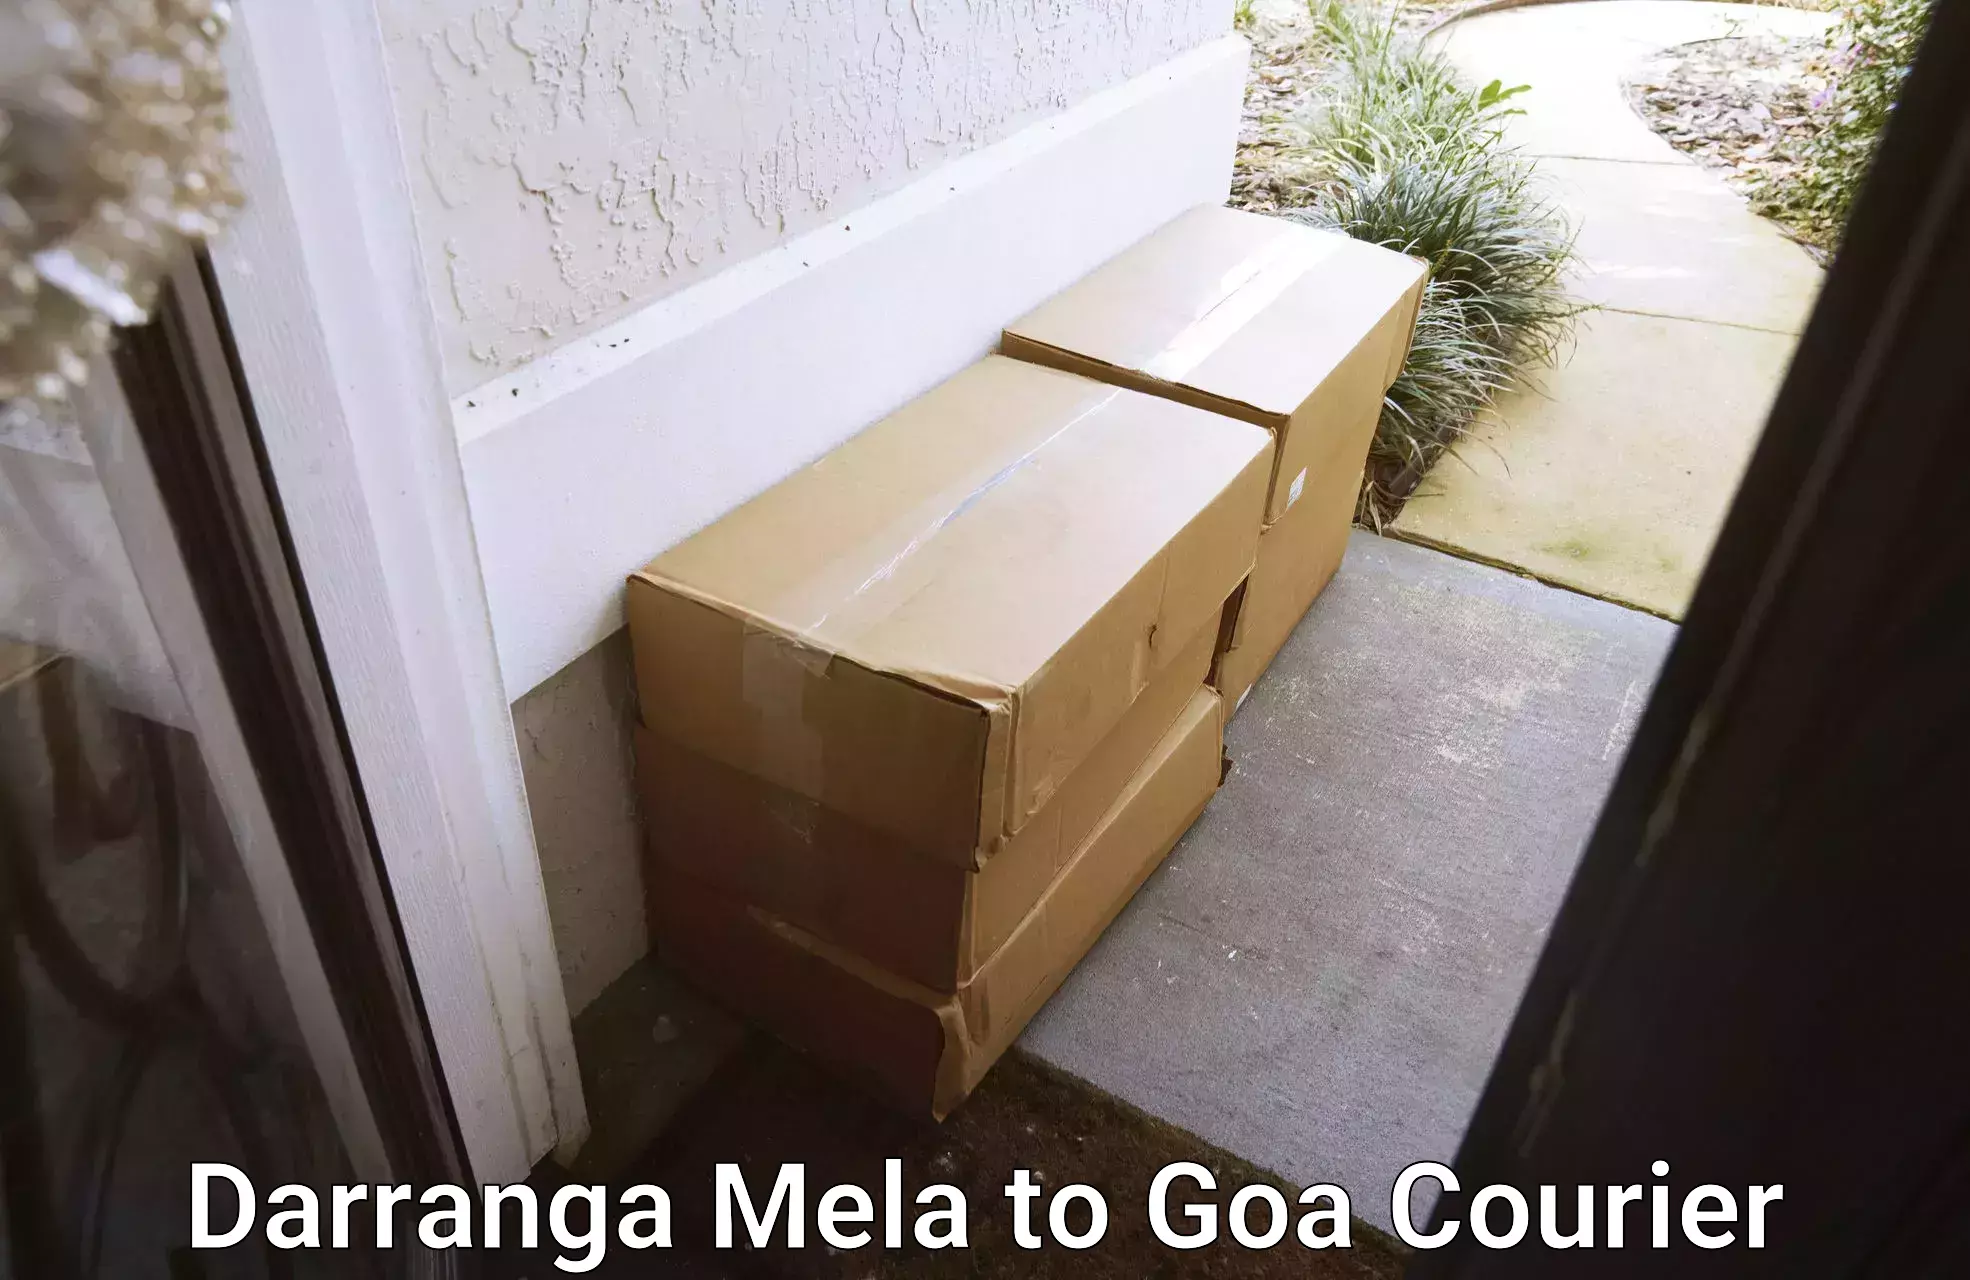 Urgent courier needs Darranga Mela to Panjim